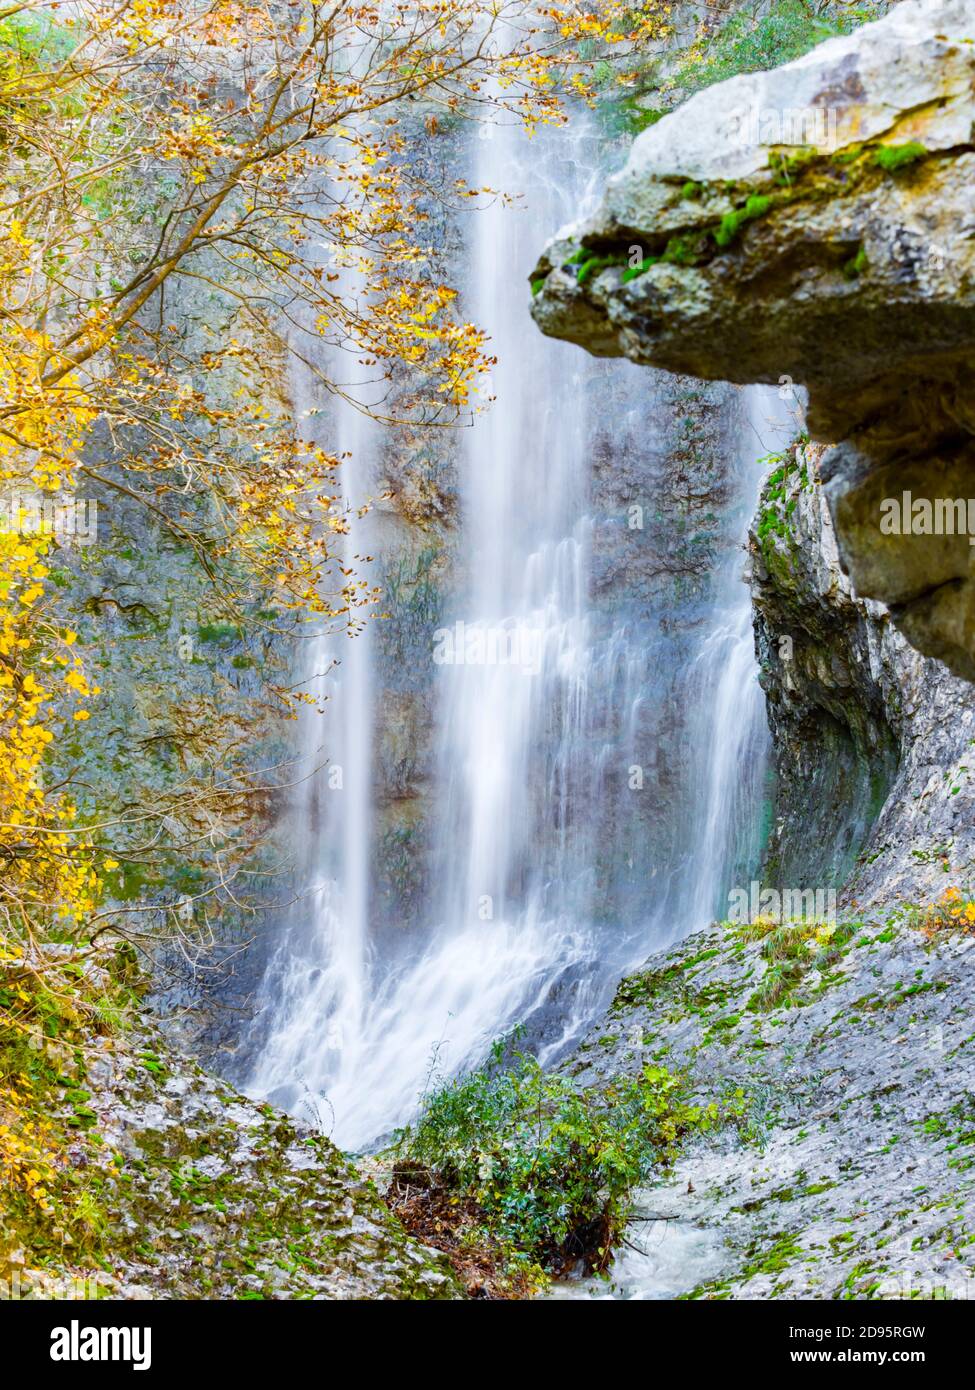 Big boulder rock balancing balance in Benkovski slap waterfall near Pican in Croatia Europe focus on background water Stock Photo